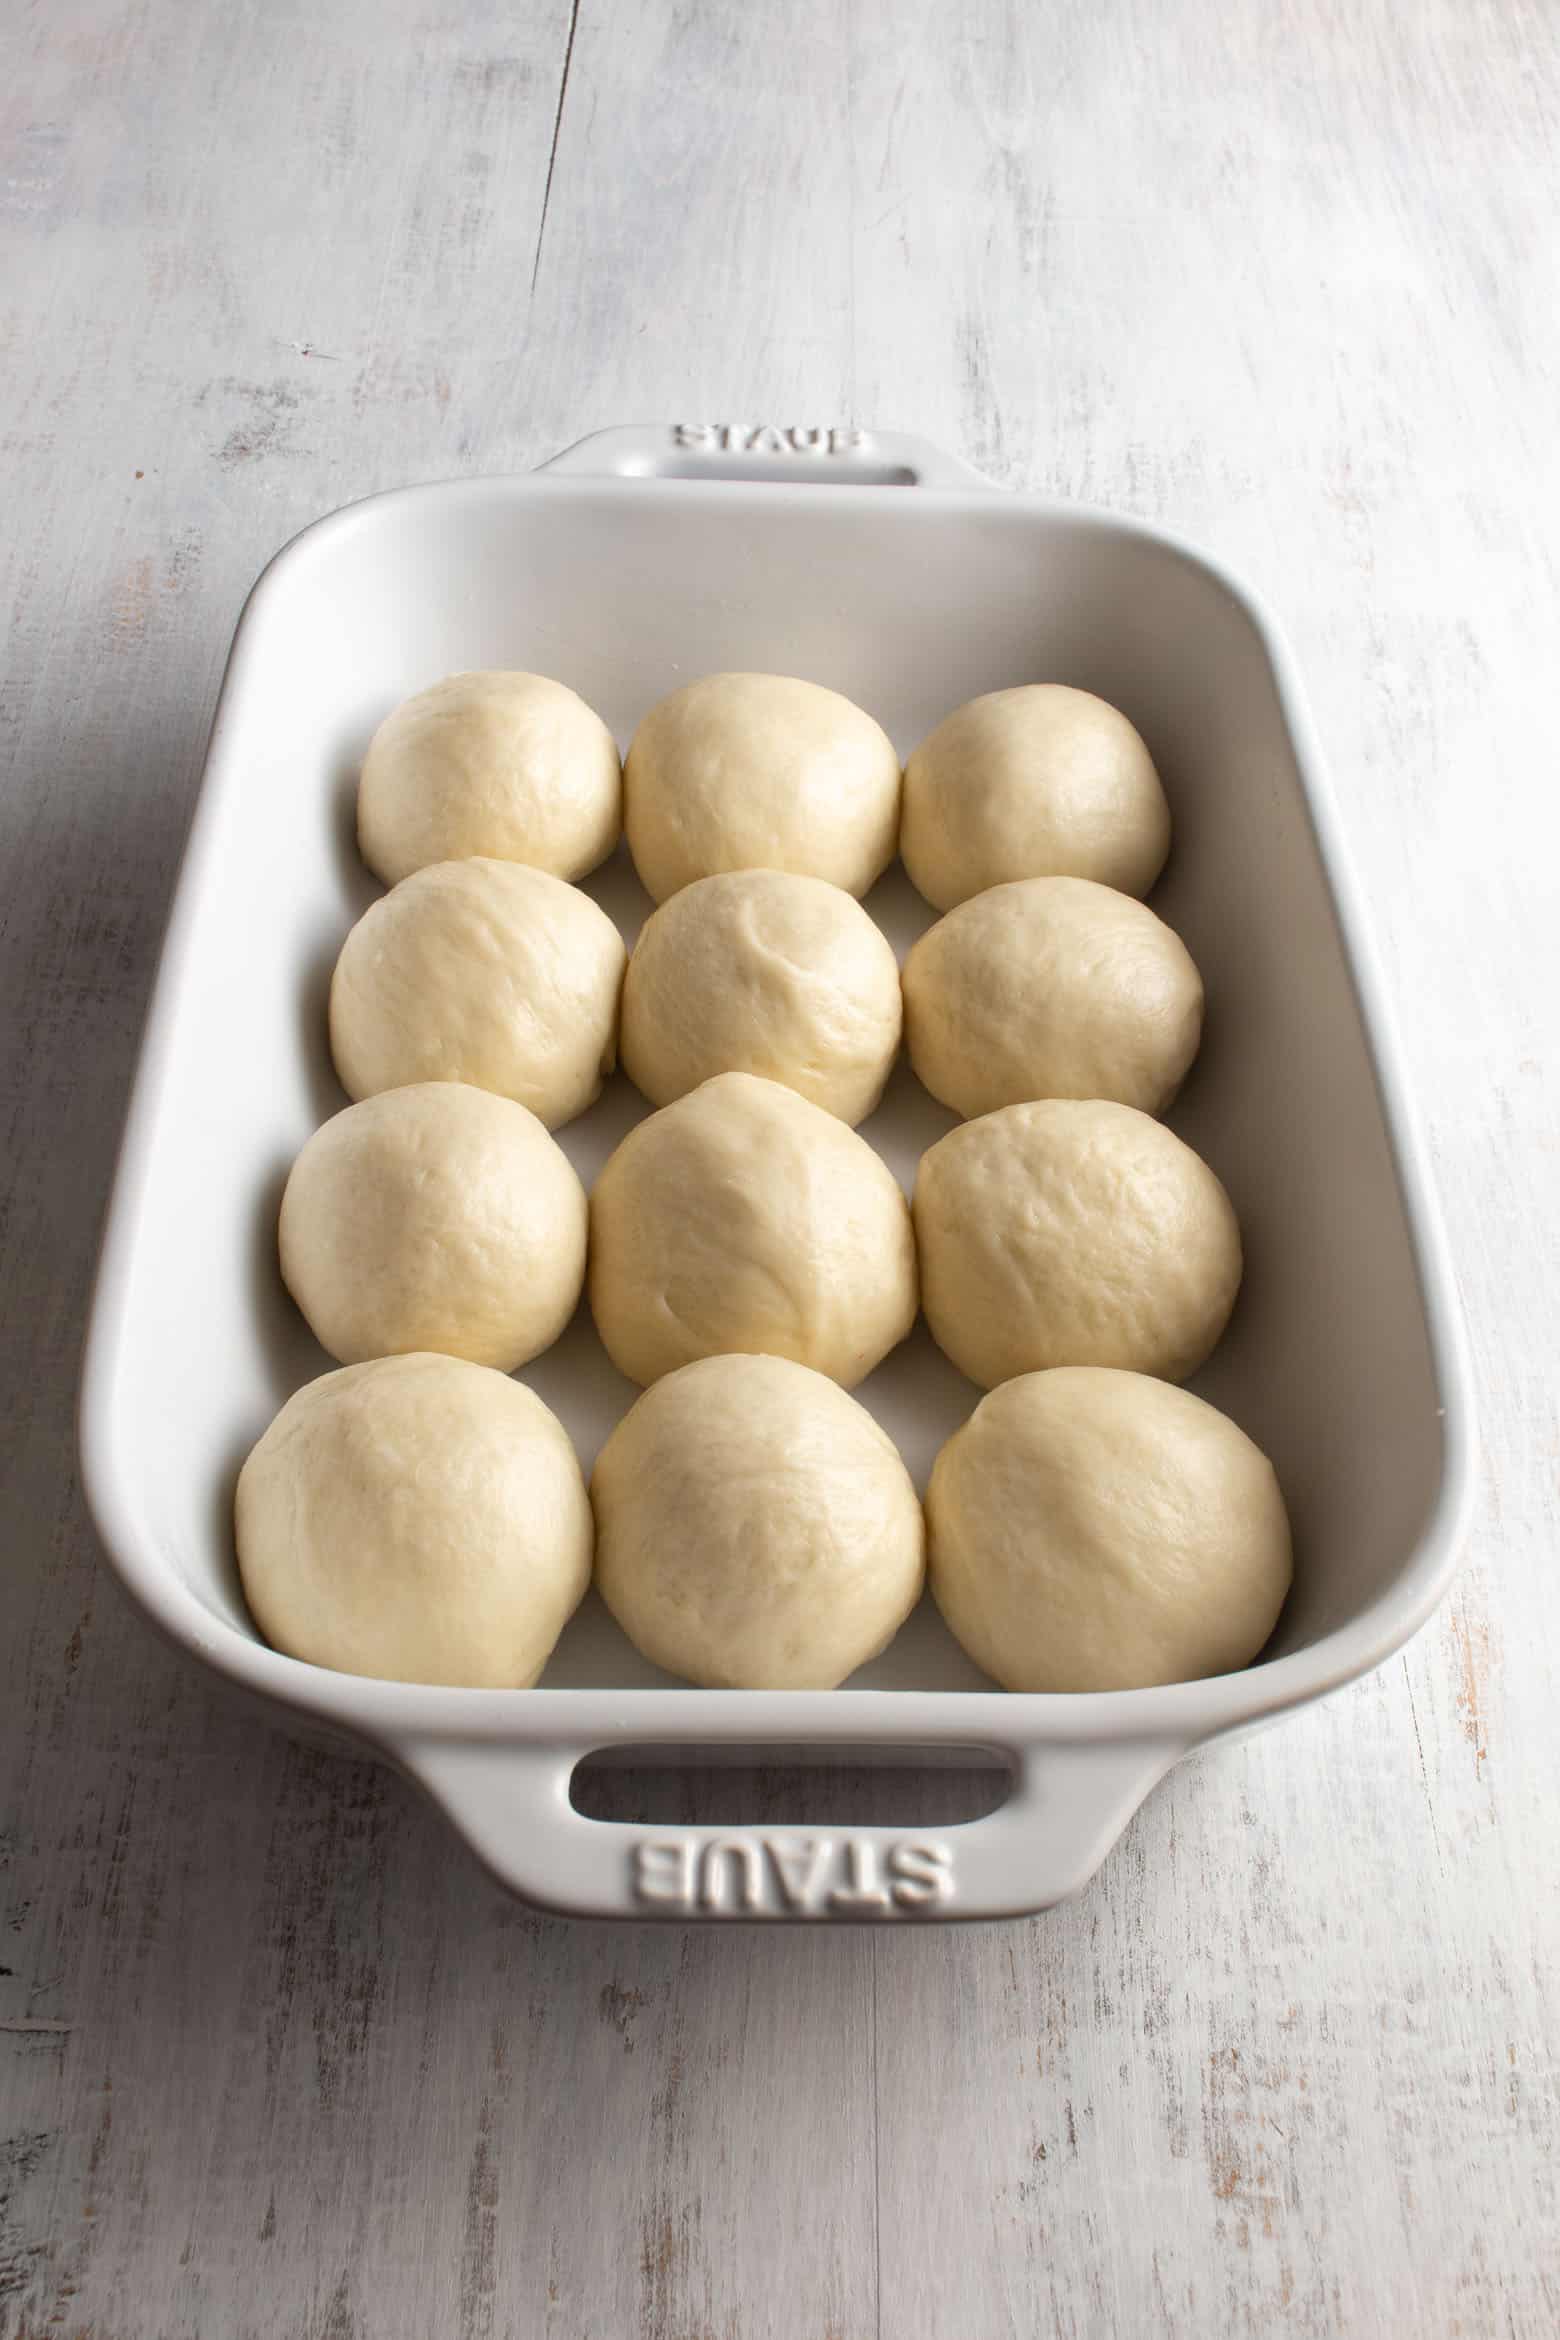 Balls of dough in a baking pan.